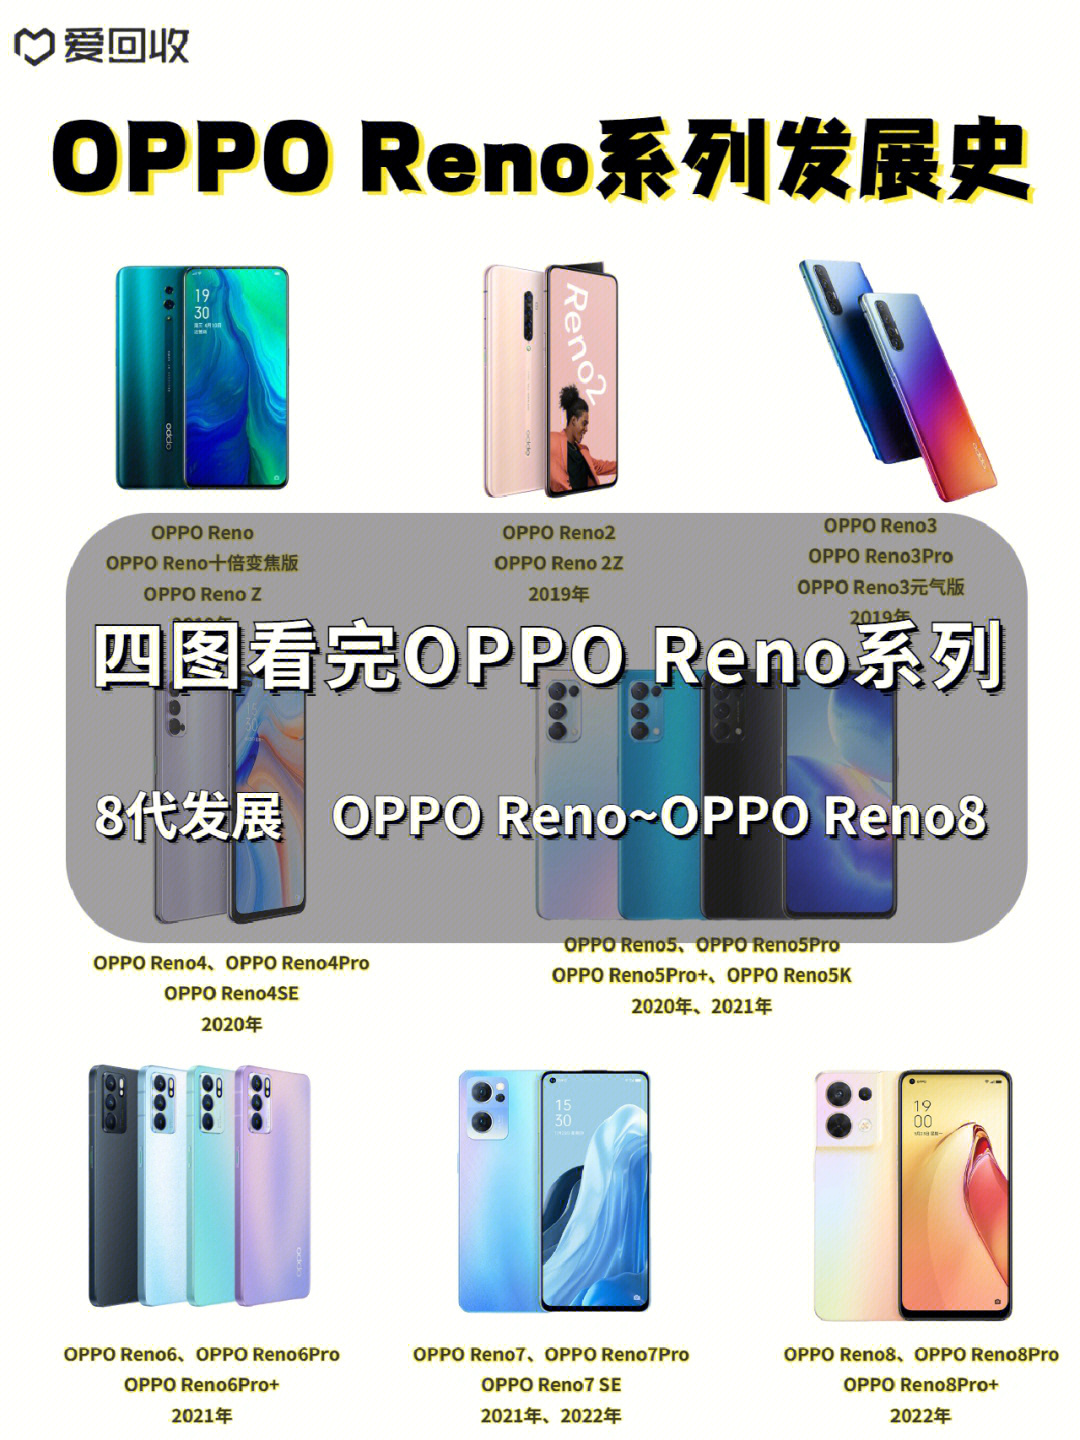 oppo reno系列发展史丨自成风格78全面升级